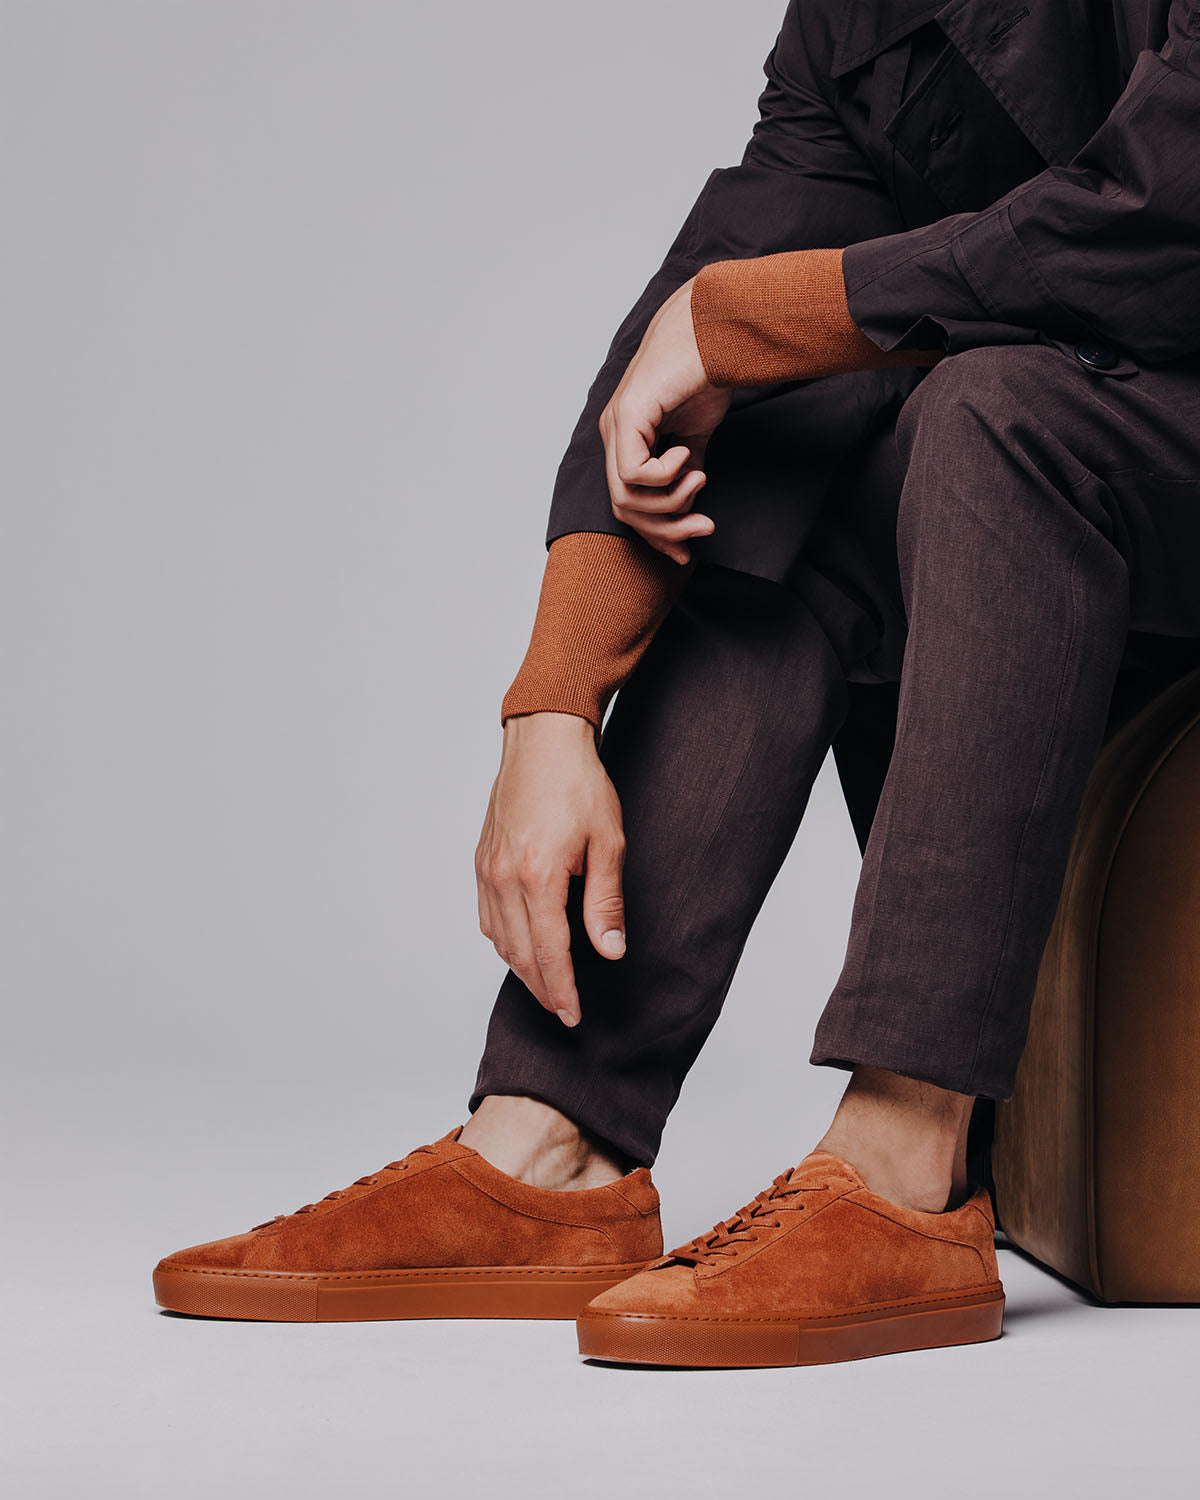 Men's Orange Low-top Suede Sneakers, Capri in Butternut